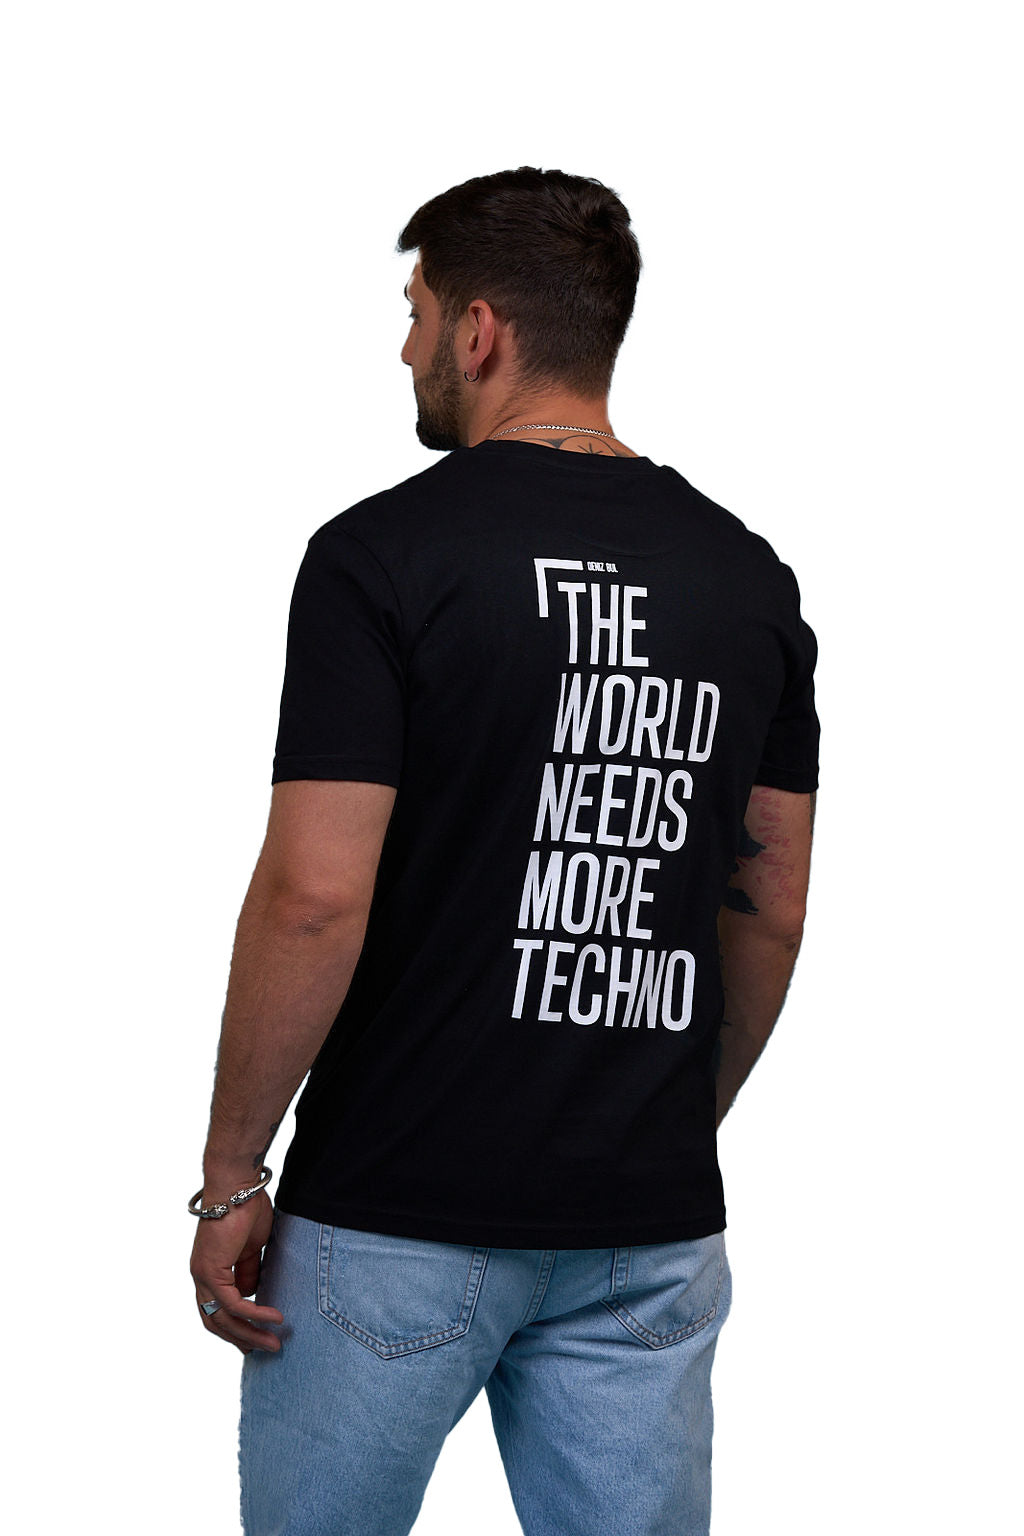 Deniz Bul - TWNMT II Basic T-Shirt